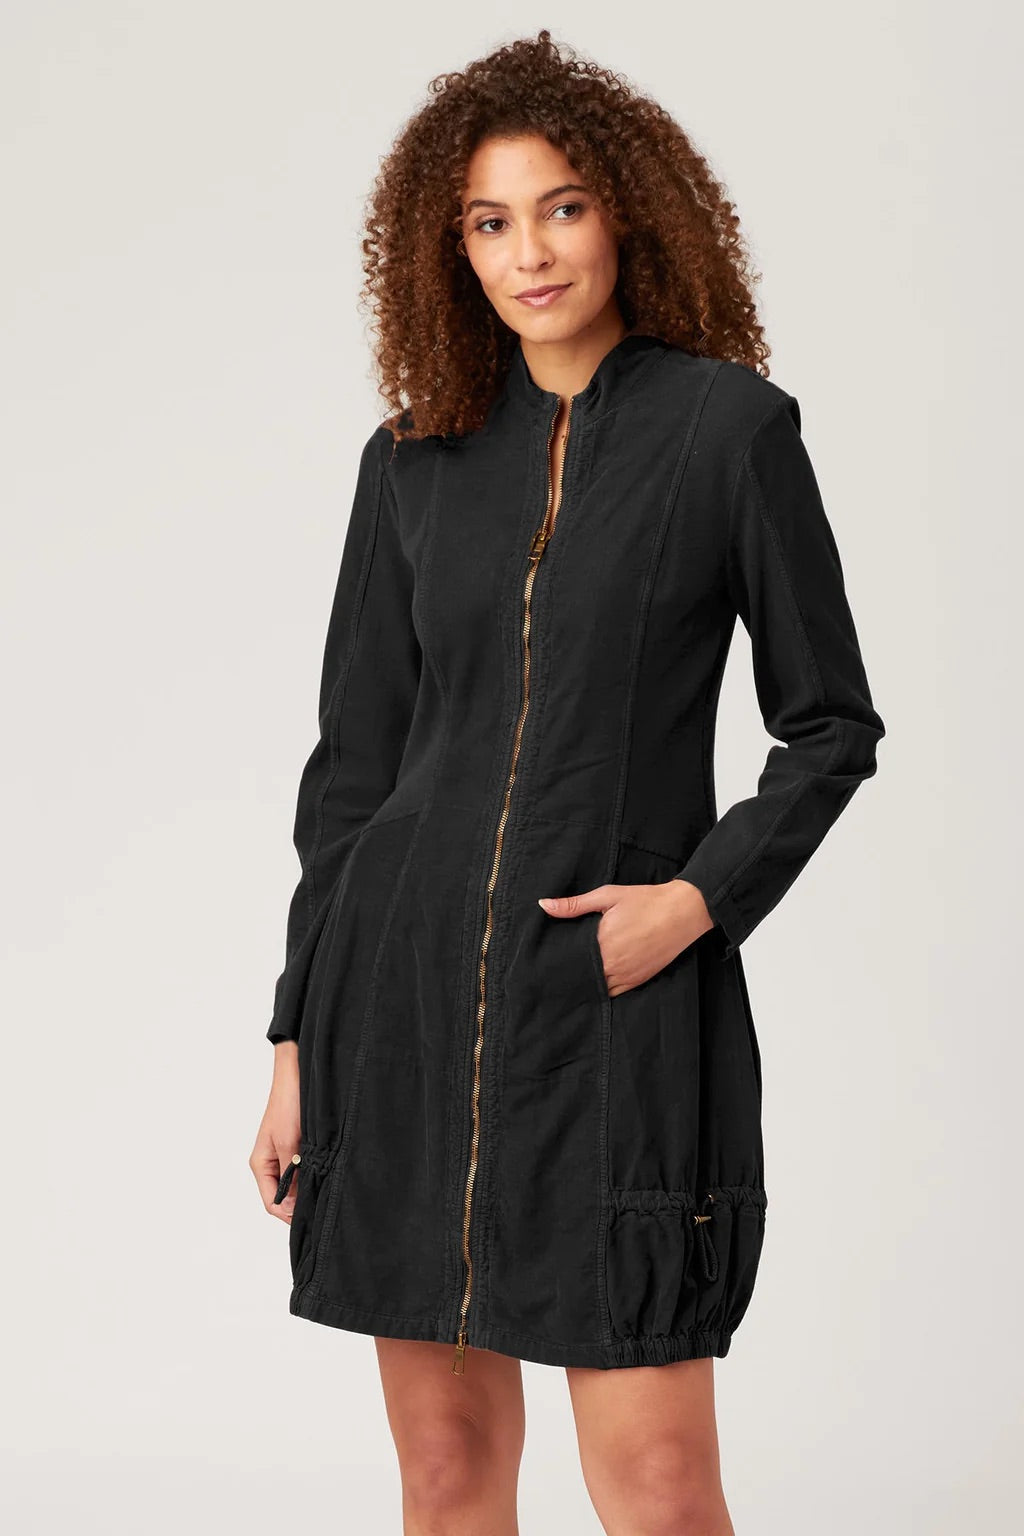 Cord Winifred Jacket Dress in Black